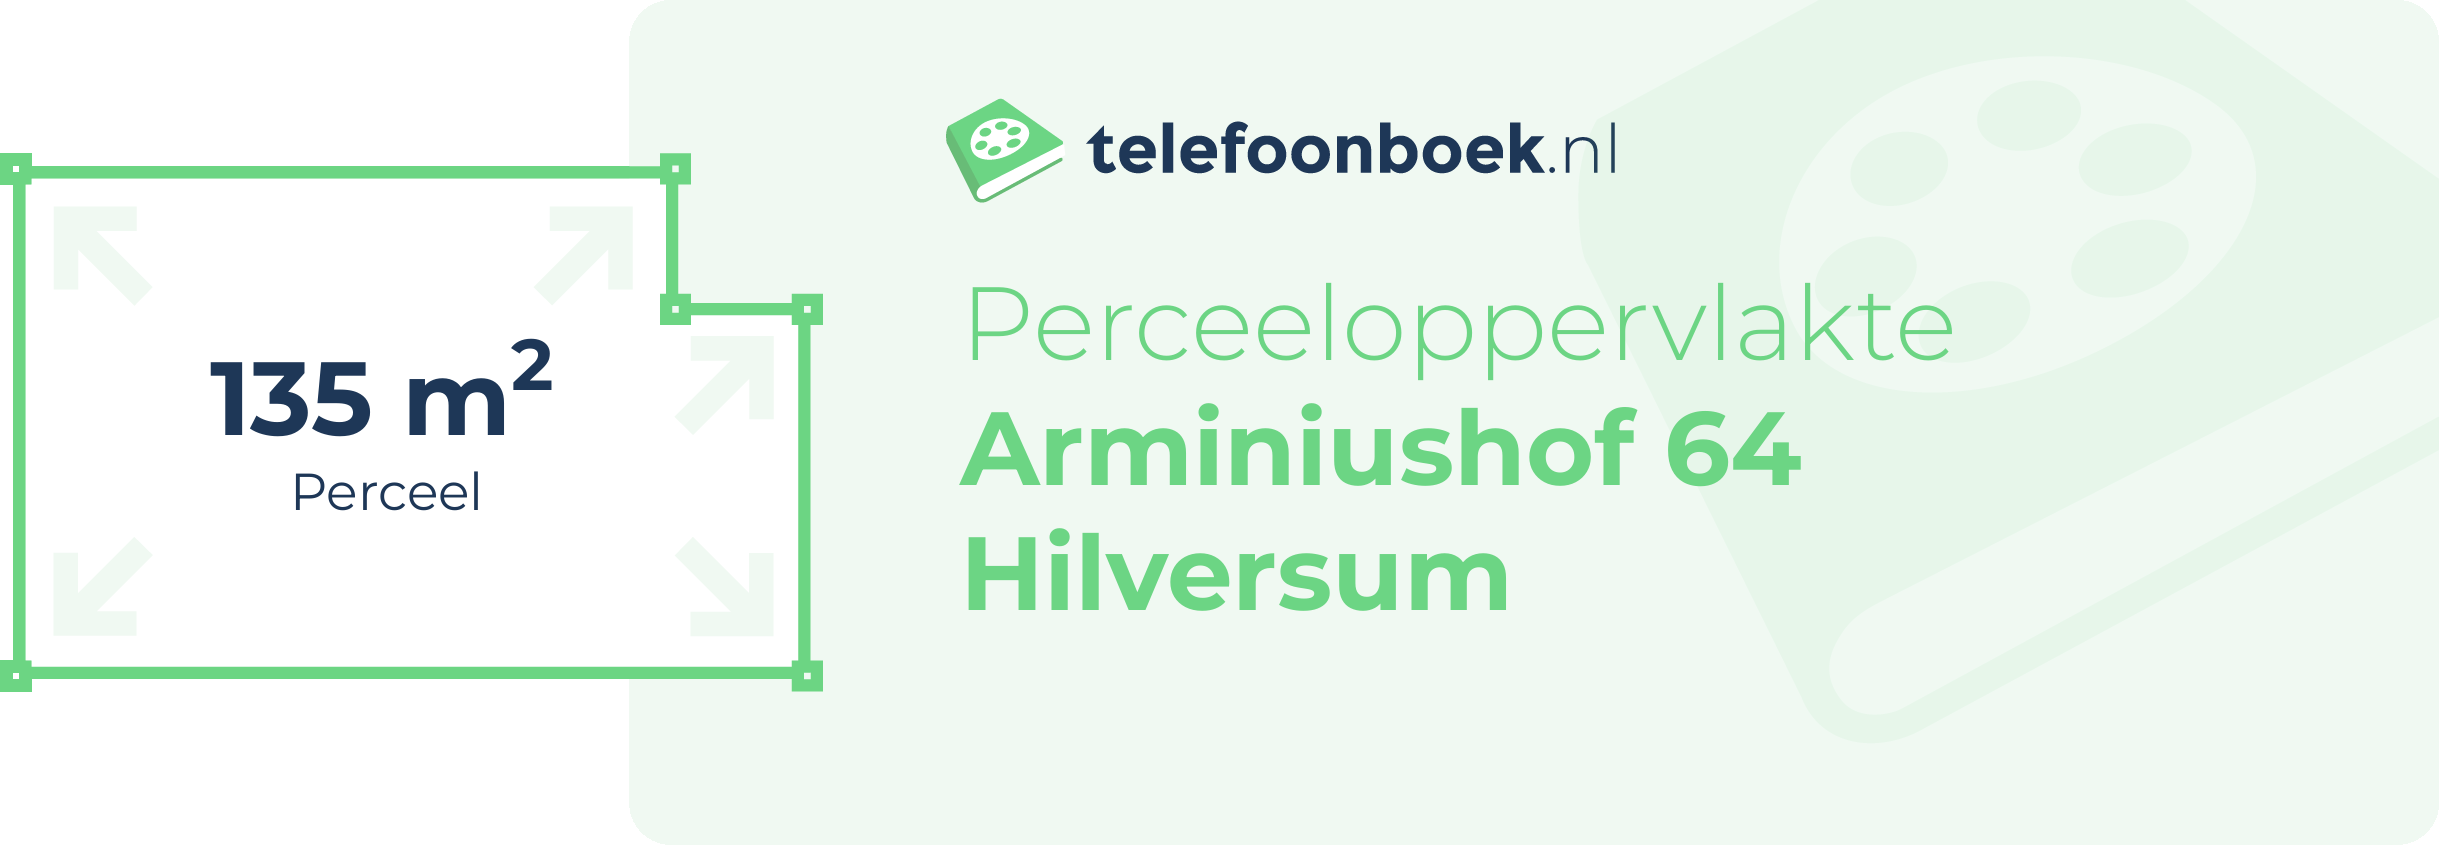 Perceeloppervlakte Arminiushof 64 Hilversum